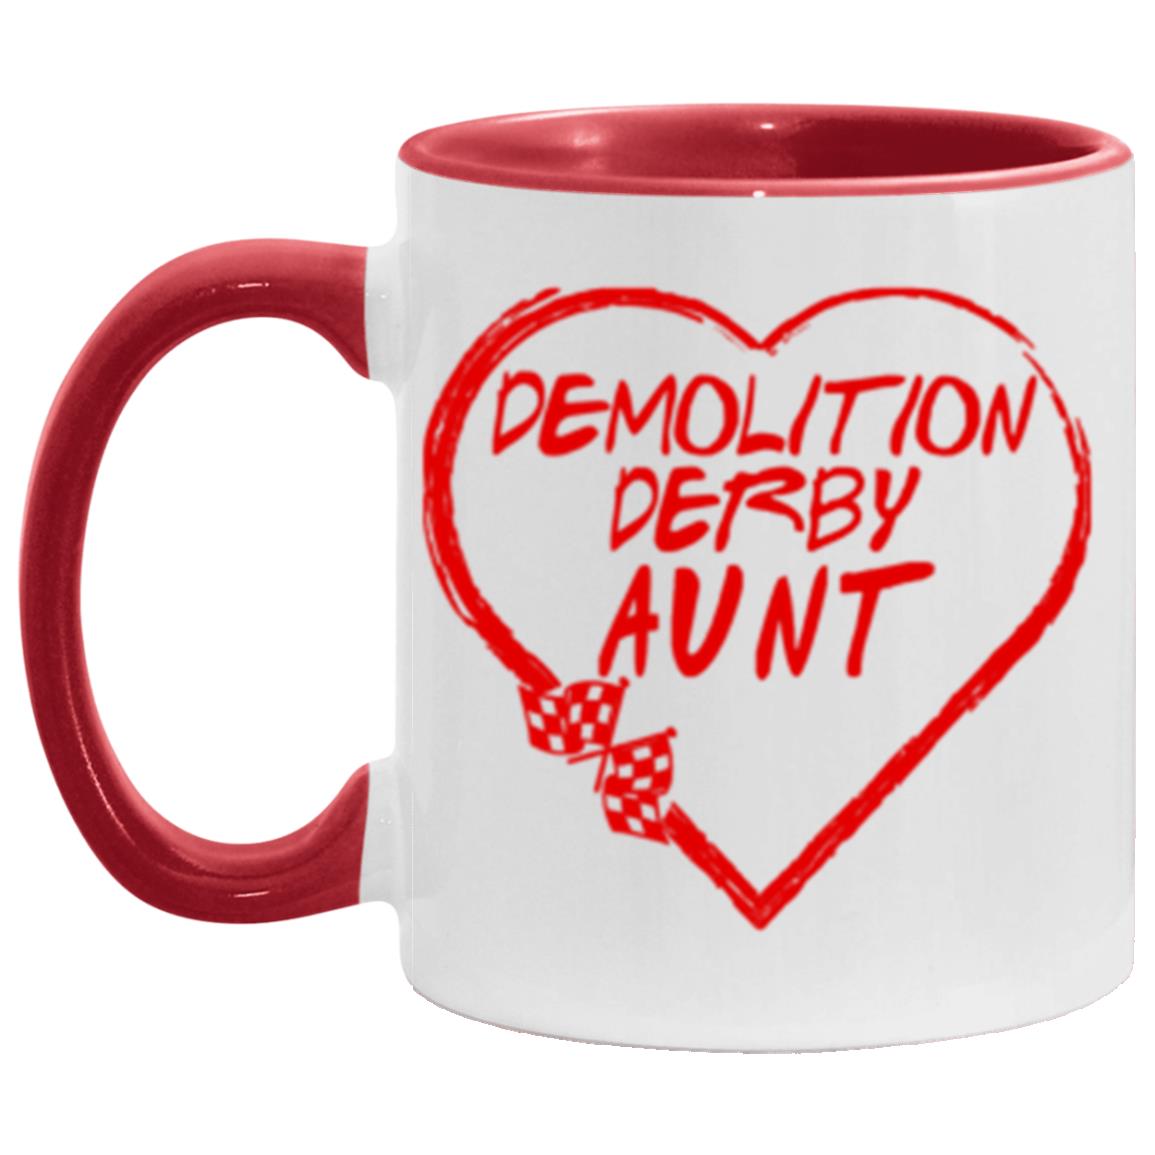 Demolition Derby Aunt Heart 11 oz. Accent Mug